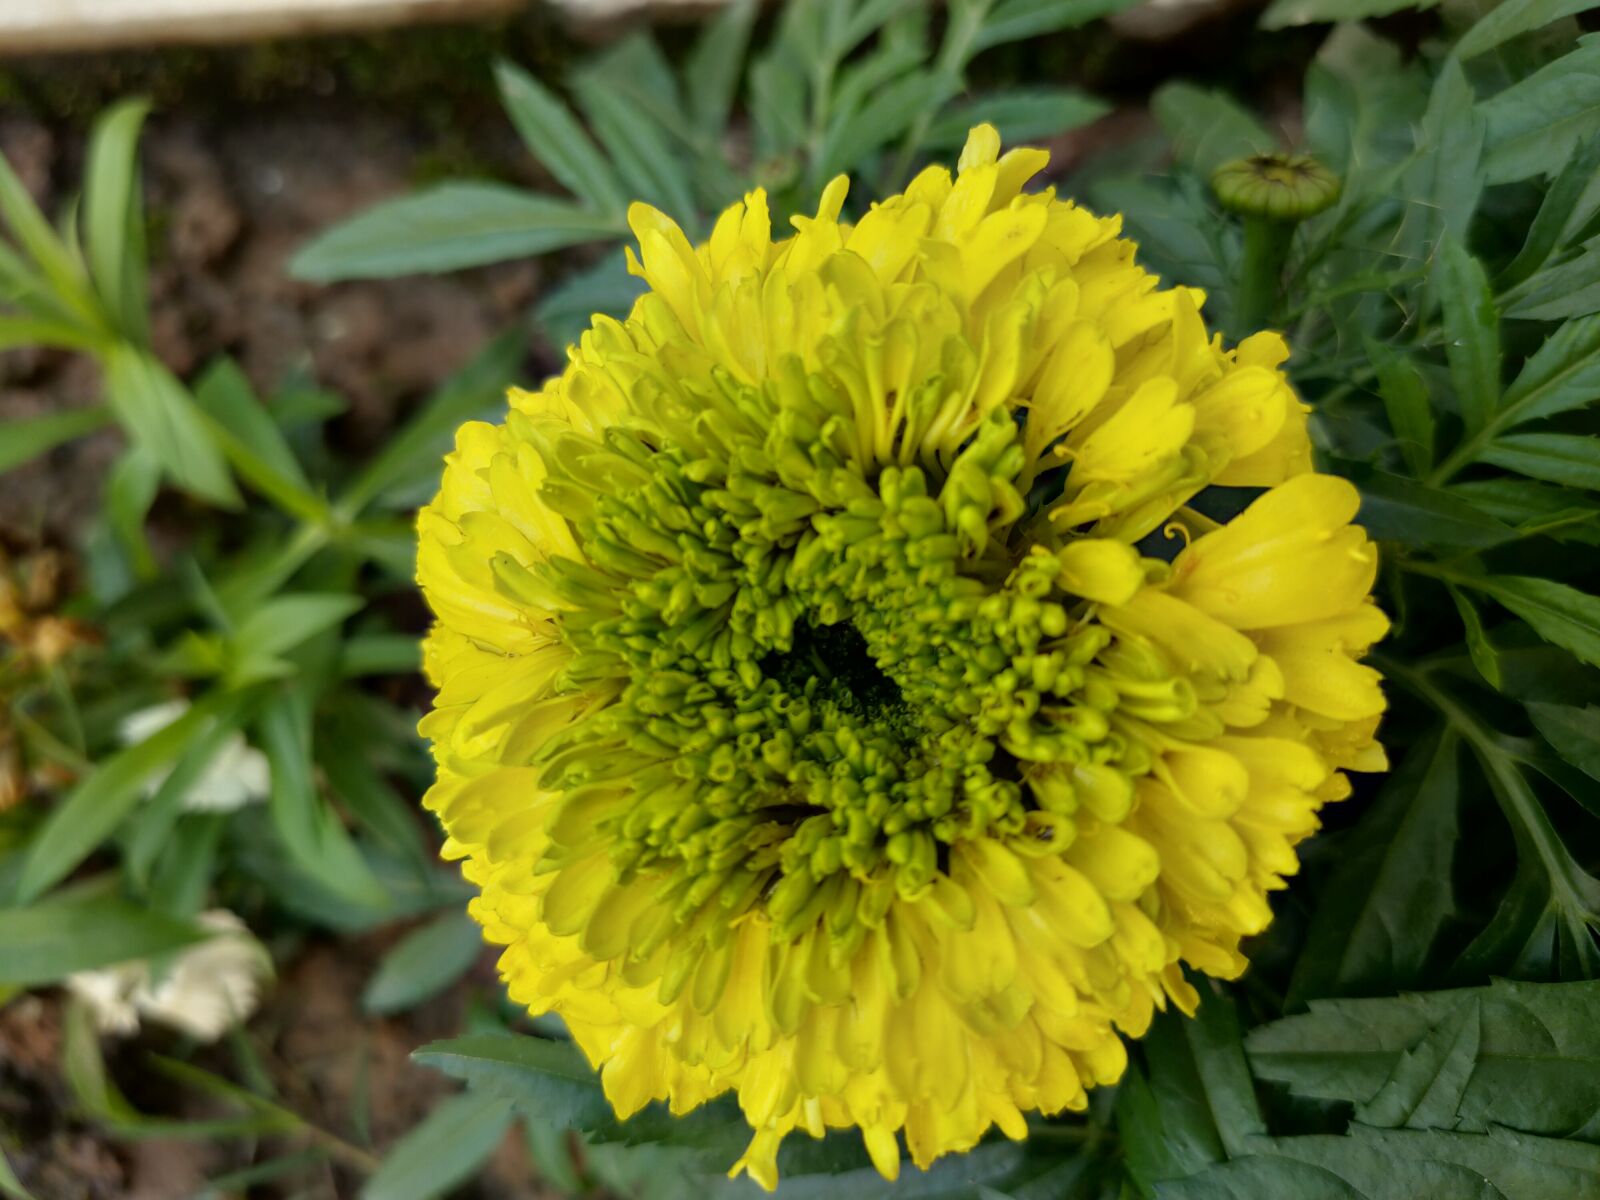 OPPO RENO2 sample photo. Flower, yellow flower, nature photography